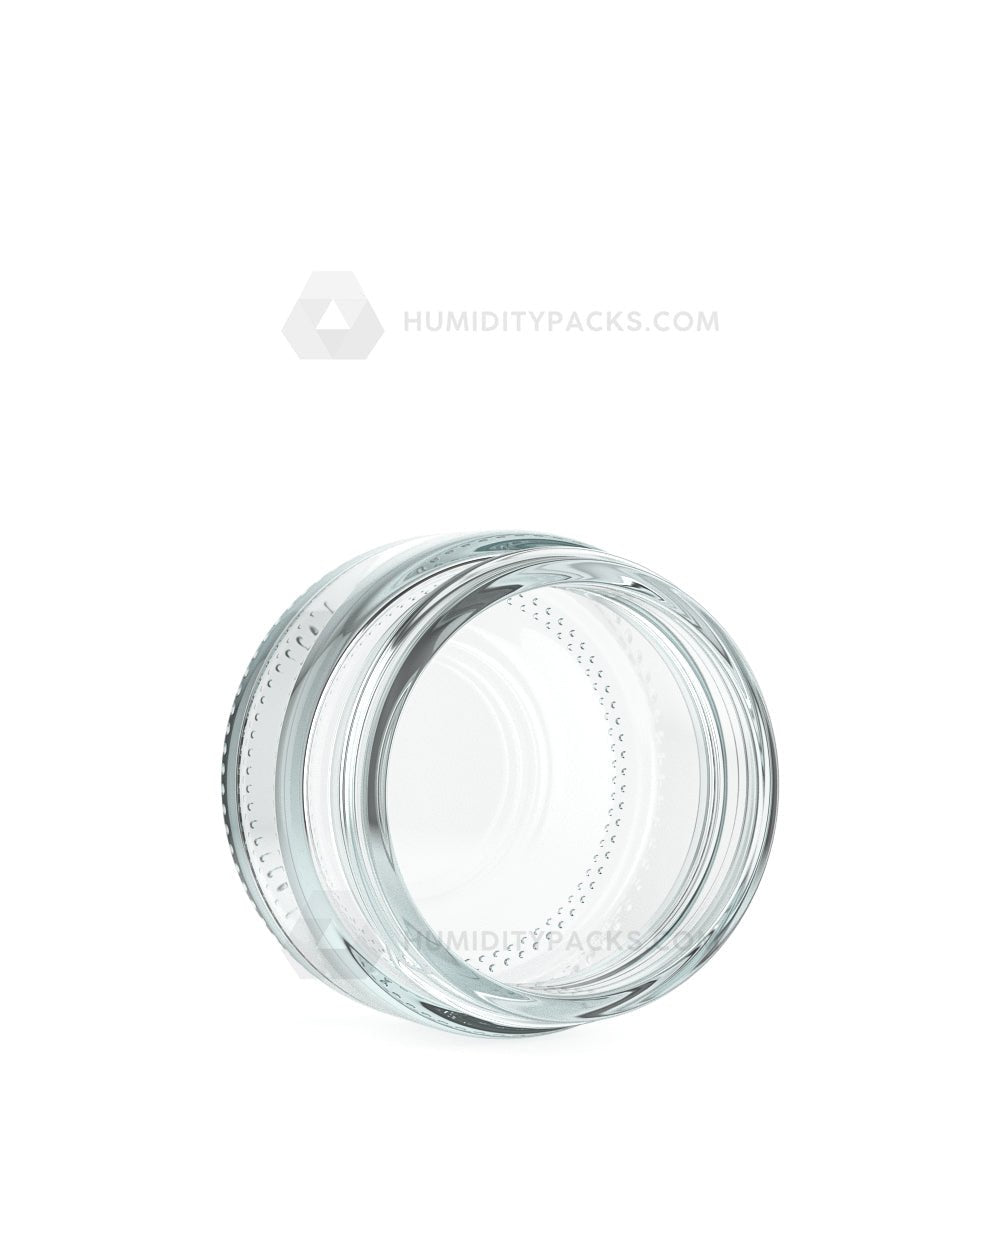 50mm Straight Sided Clear 1oz Glass Jar 200/Box Humidity Packs - 3